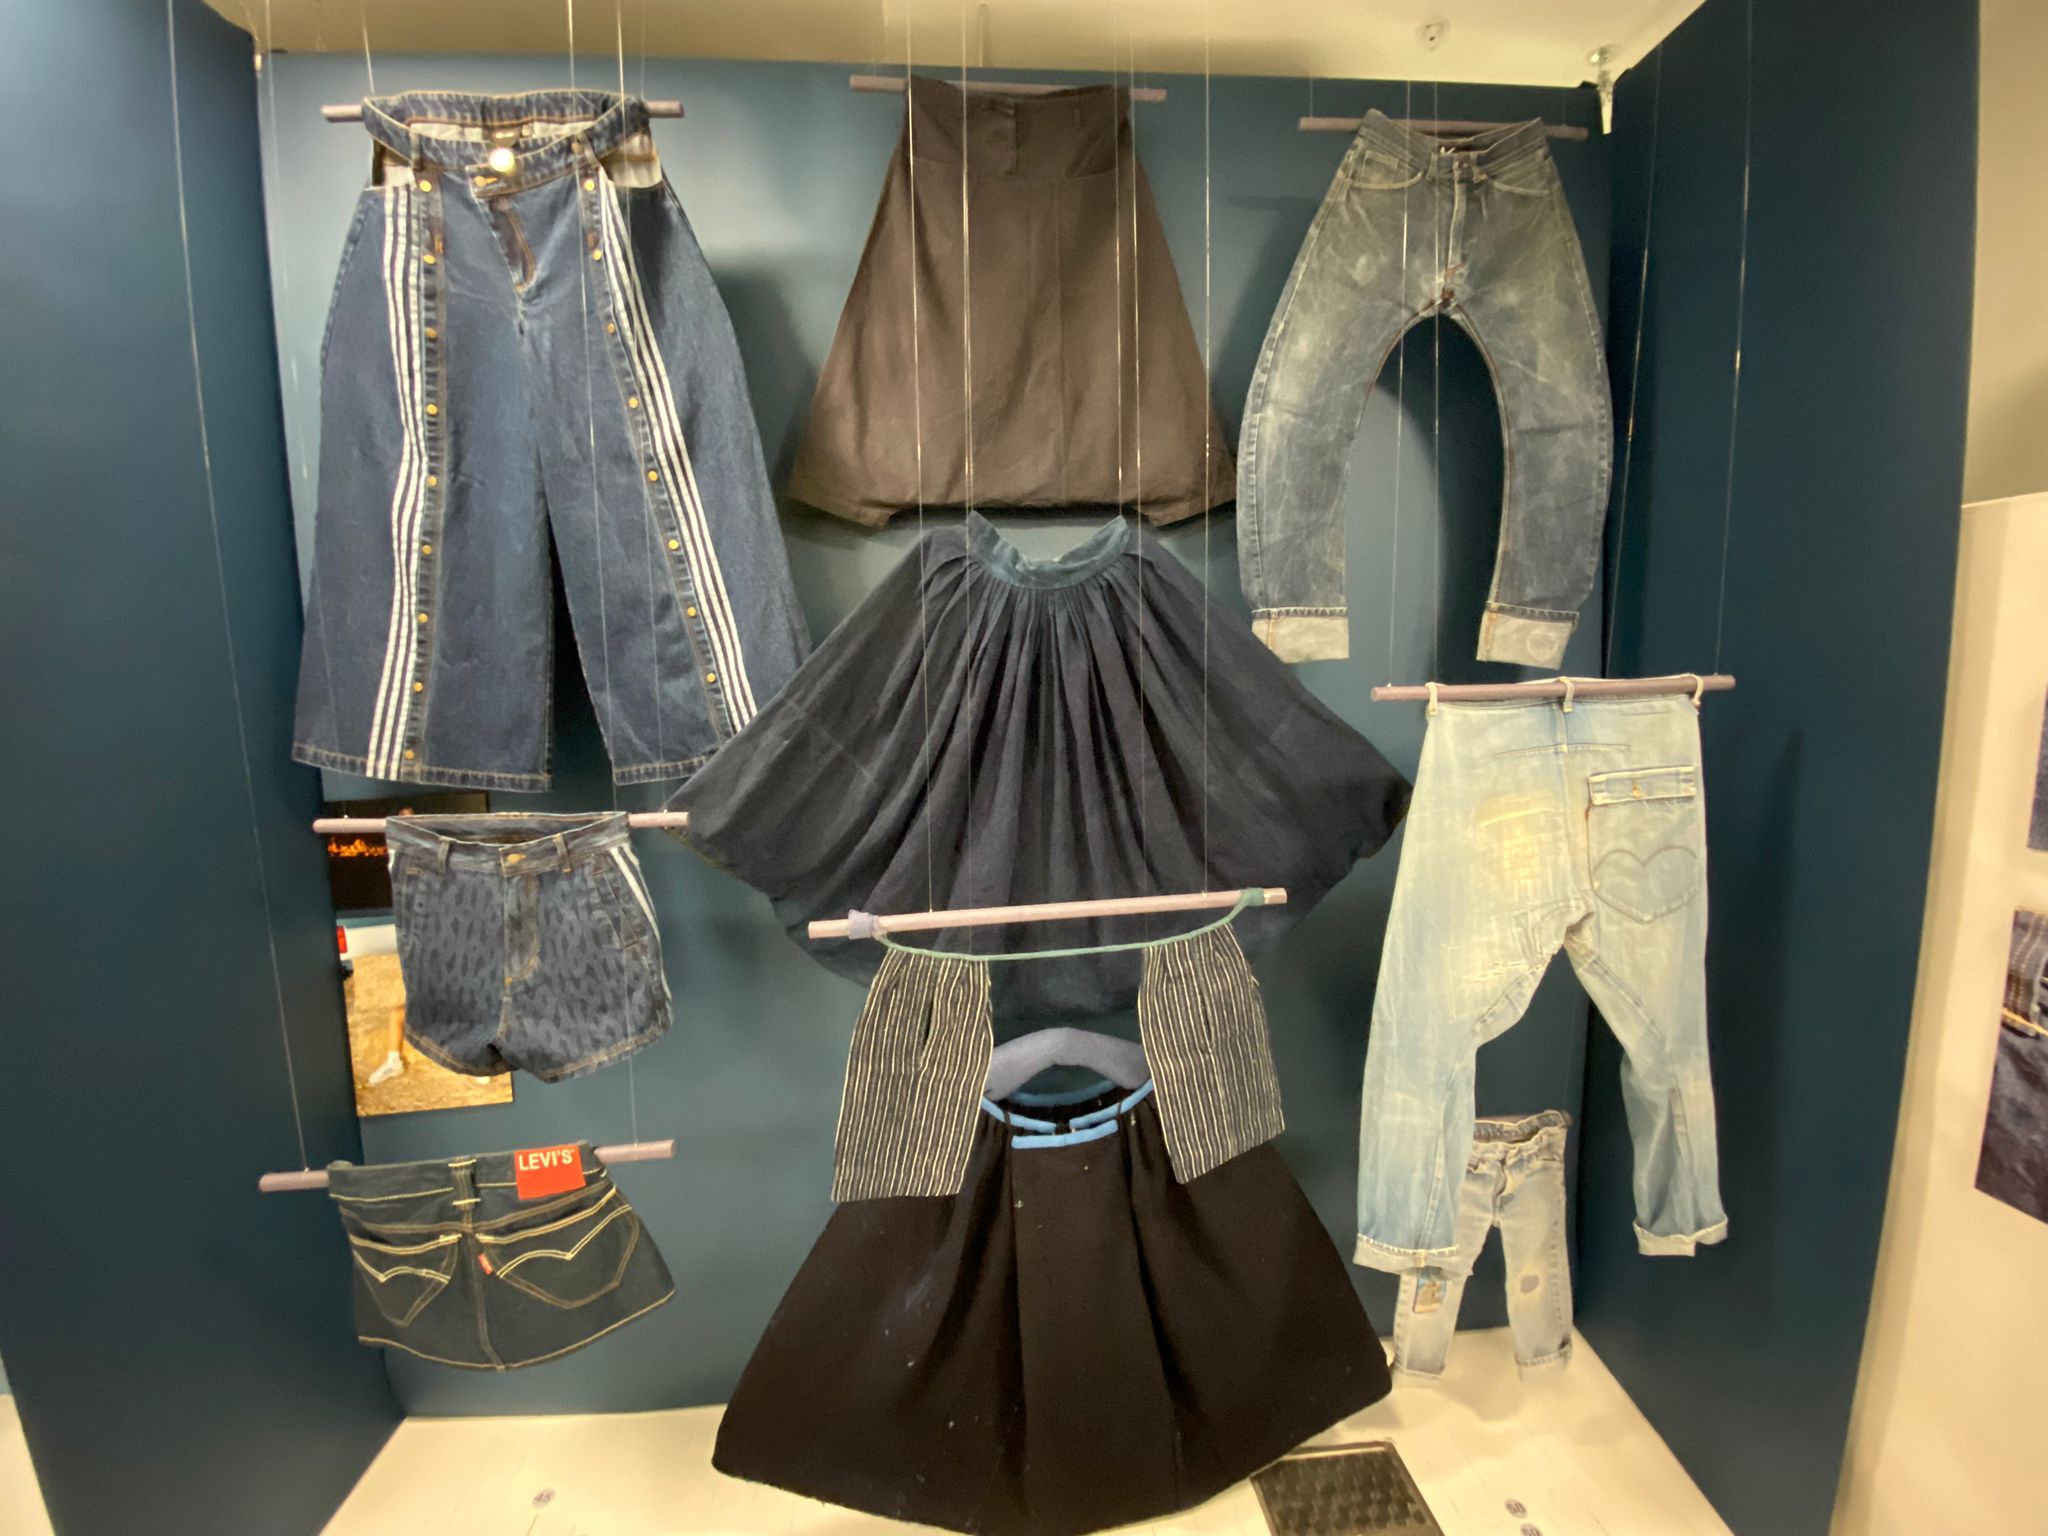 A display of blue garments including Denim